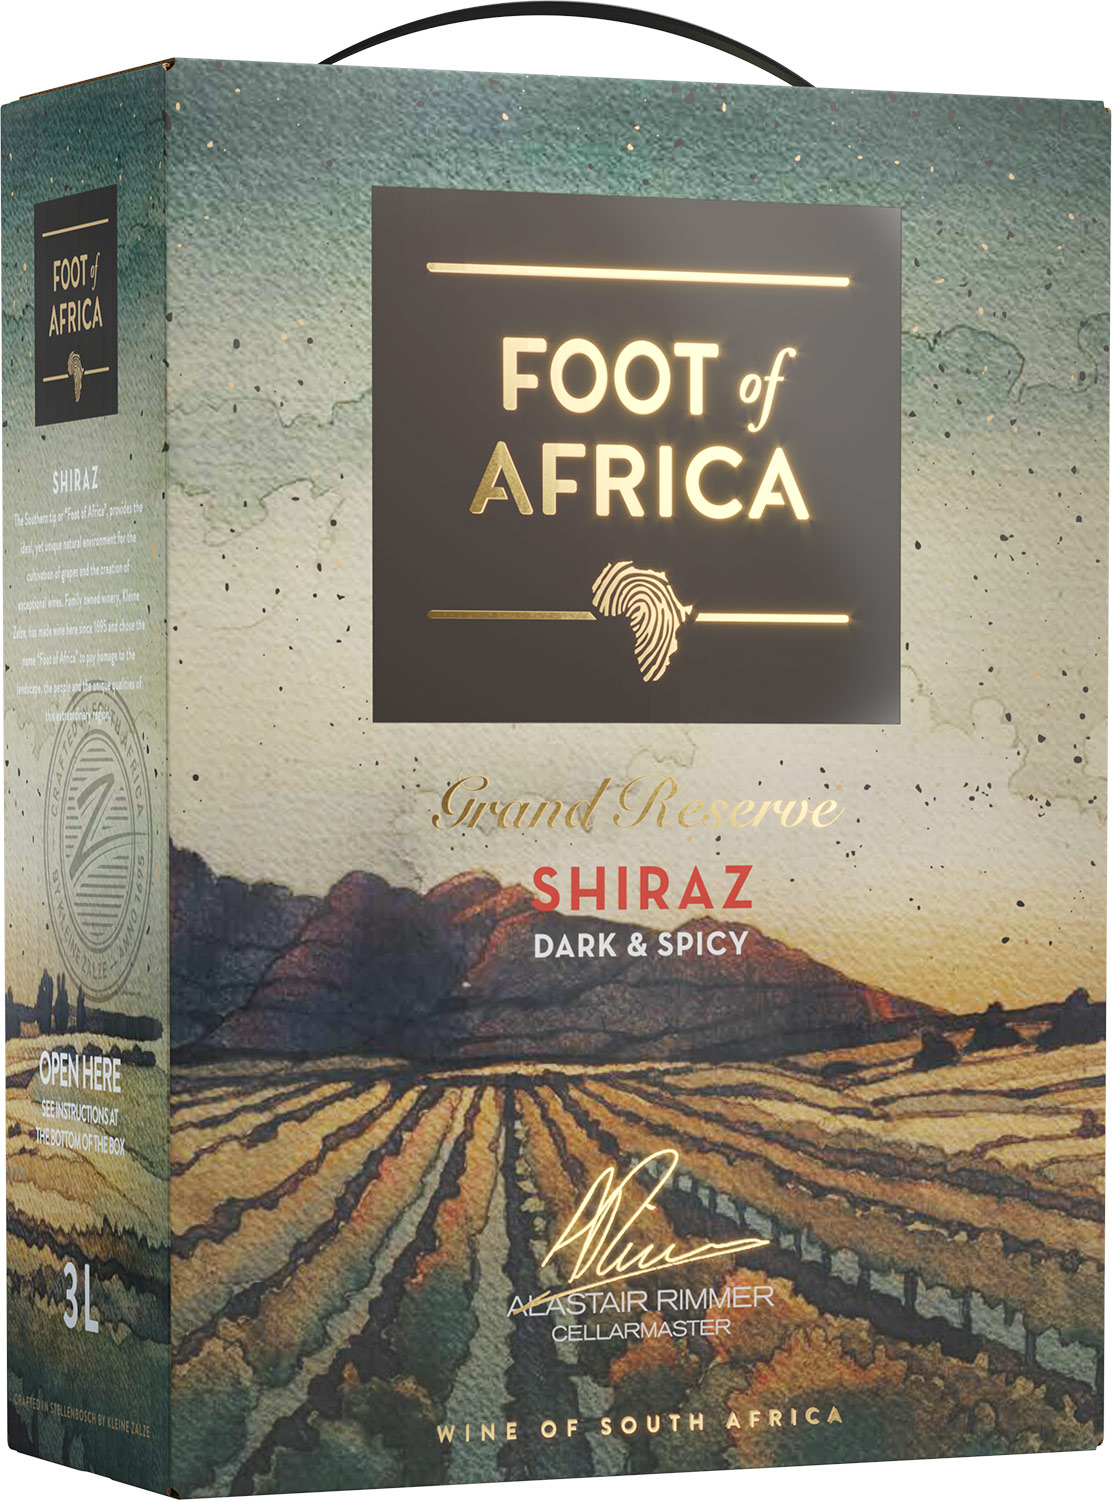 Foot of Africa Shiraz